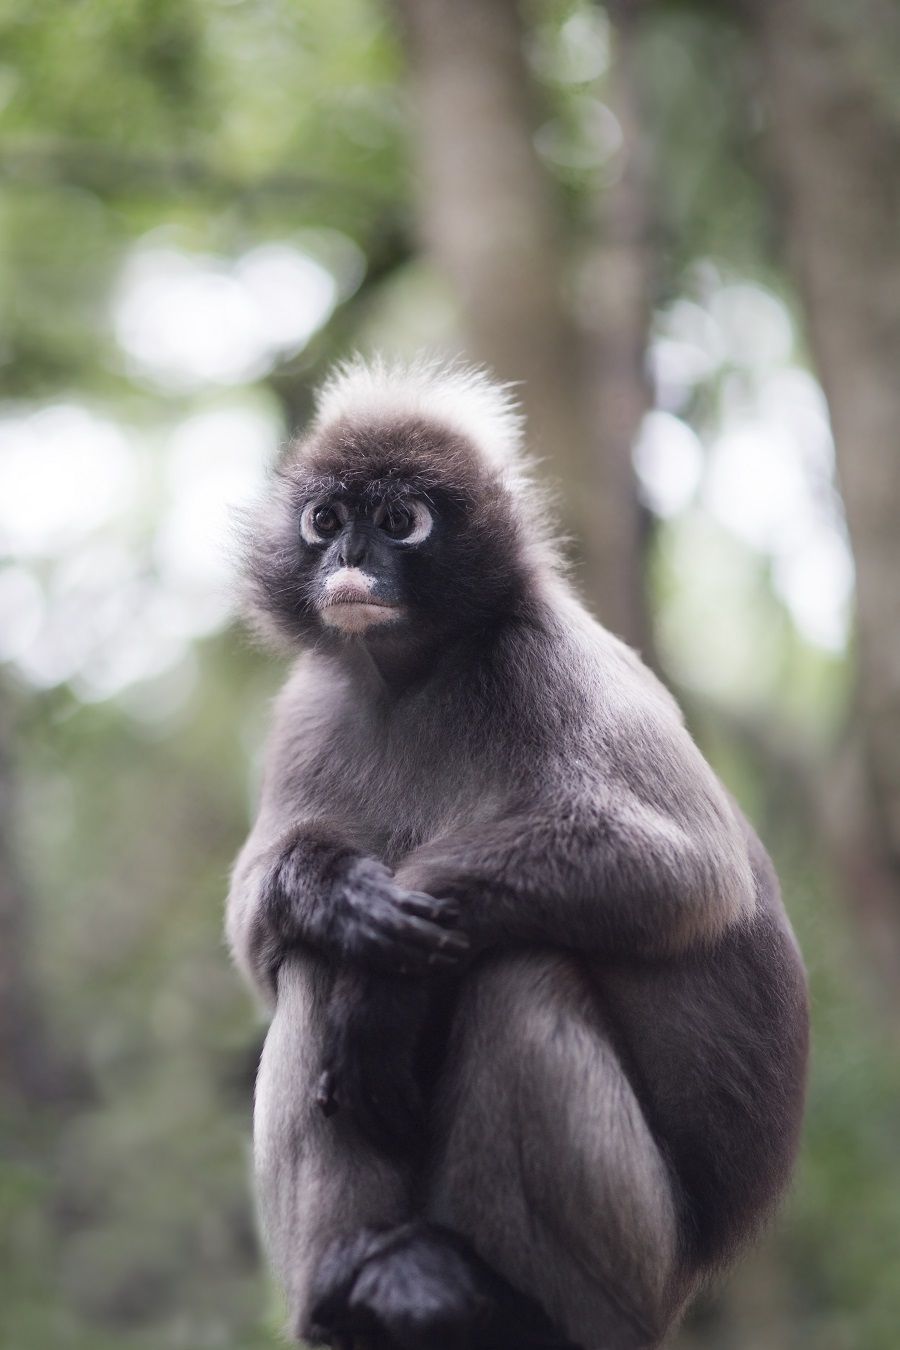 Bespectacled monkey population rising in Tripura despite loss of habitat